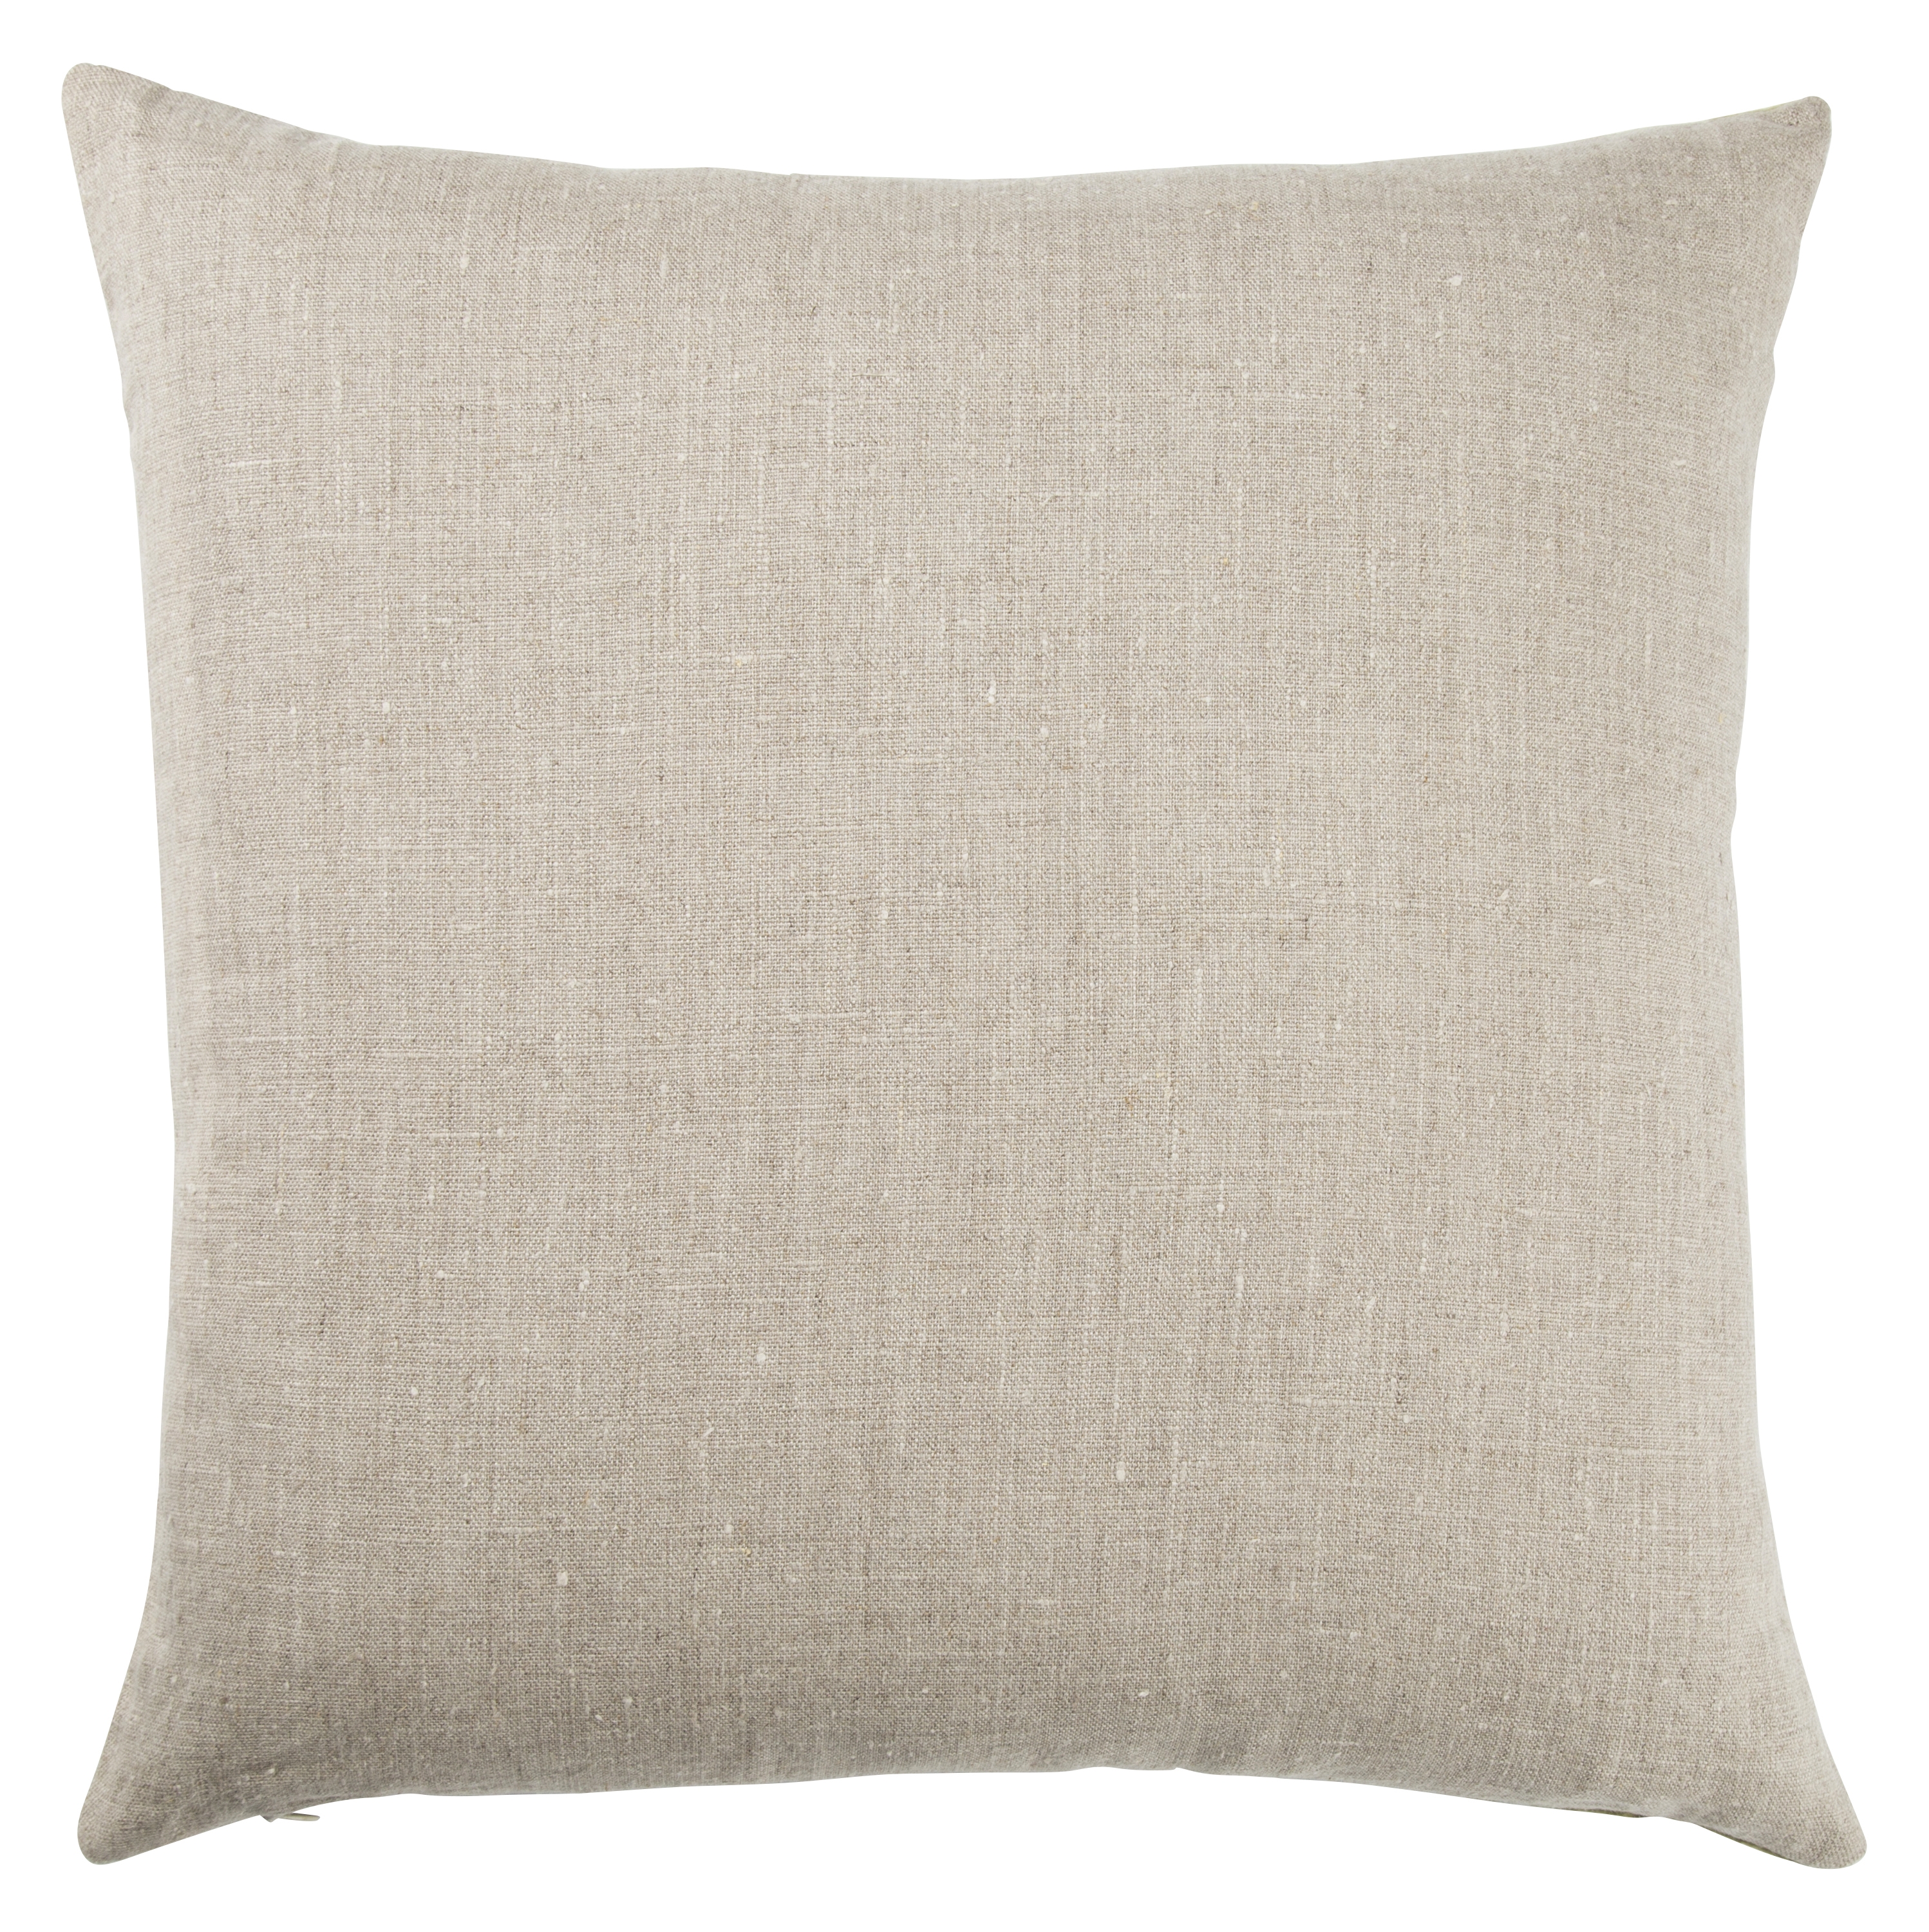 Design (US) Olive 20"X20" Pillow - Image 1